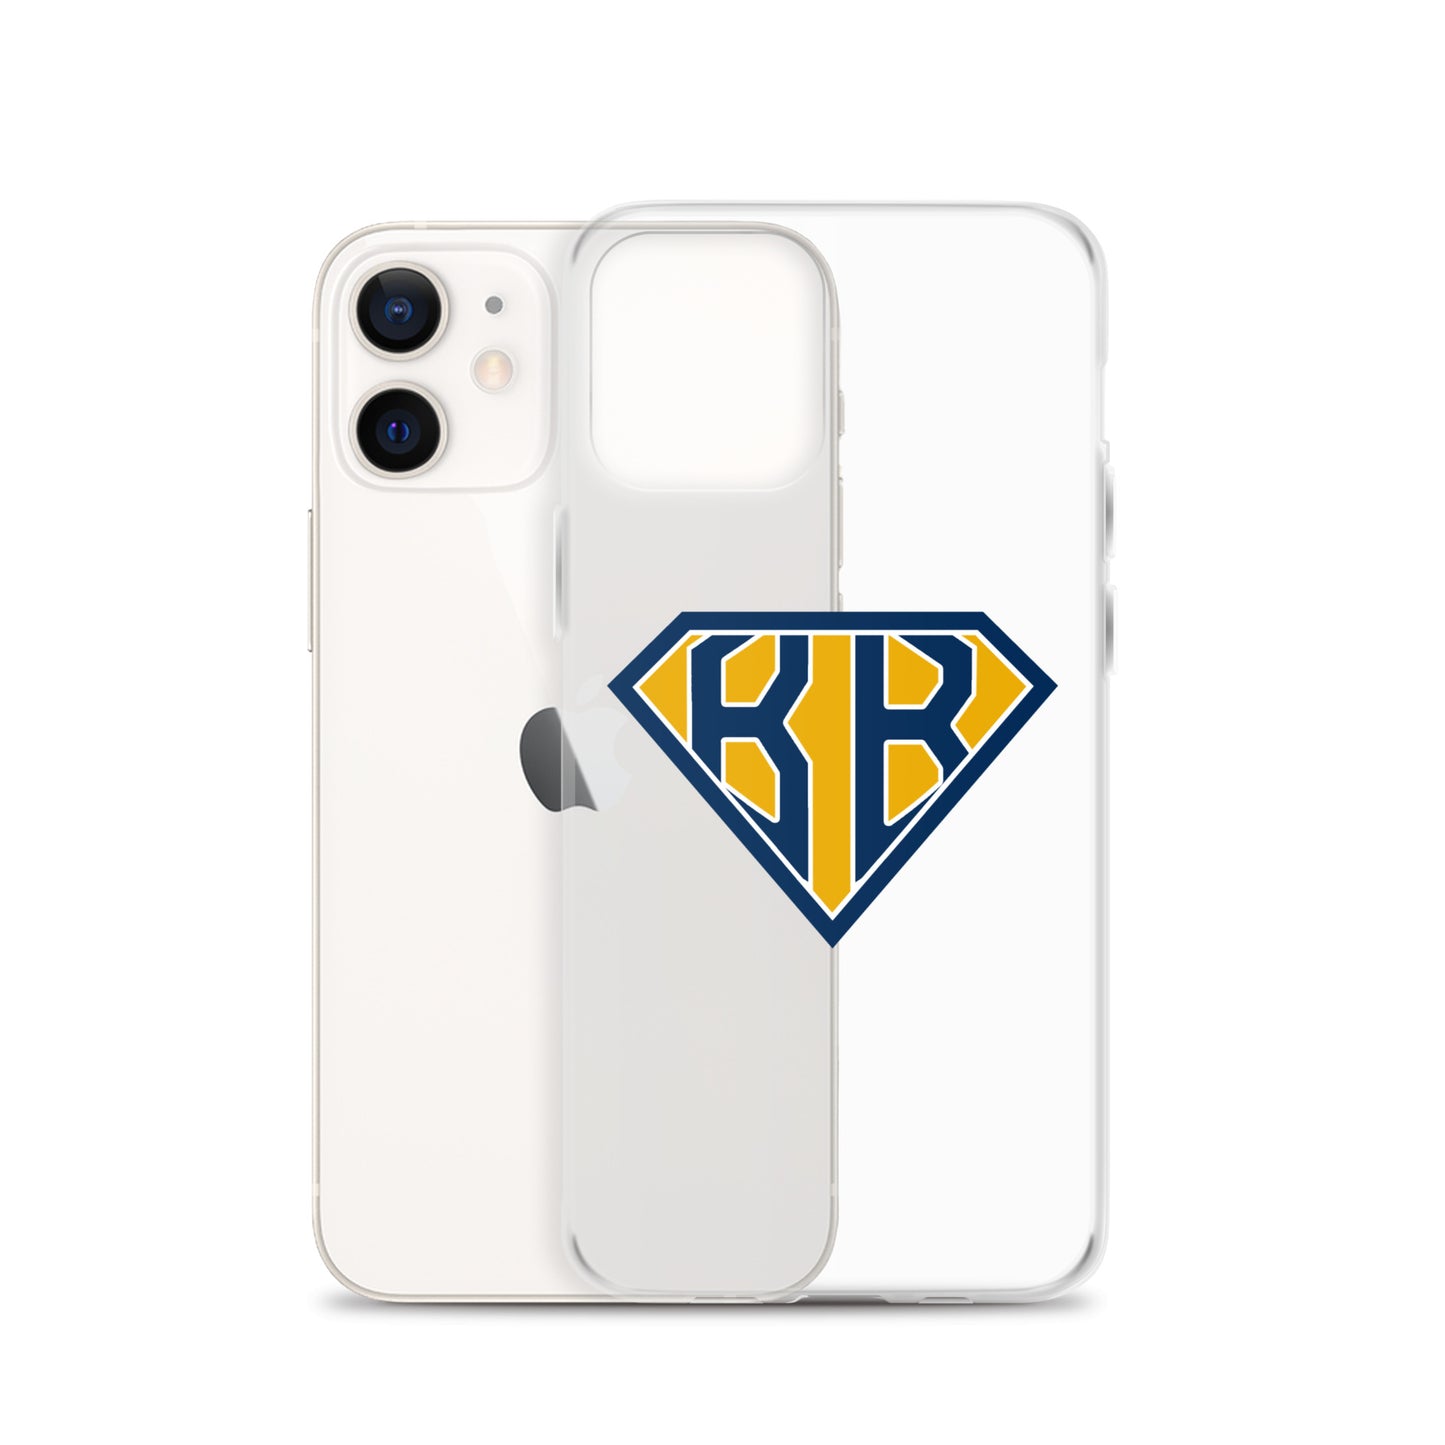 BB iPhone Case